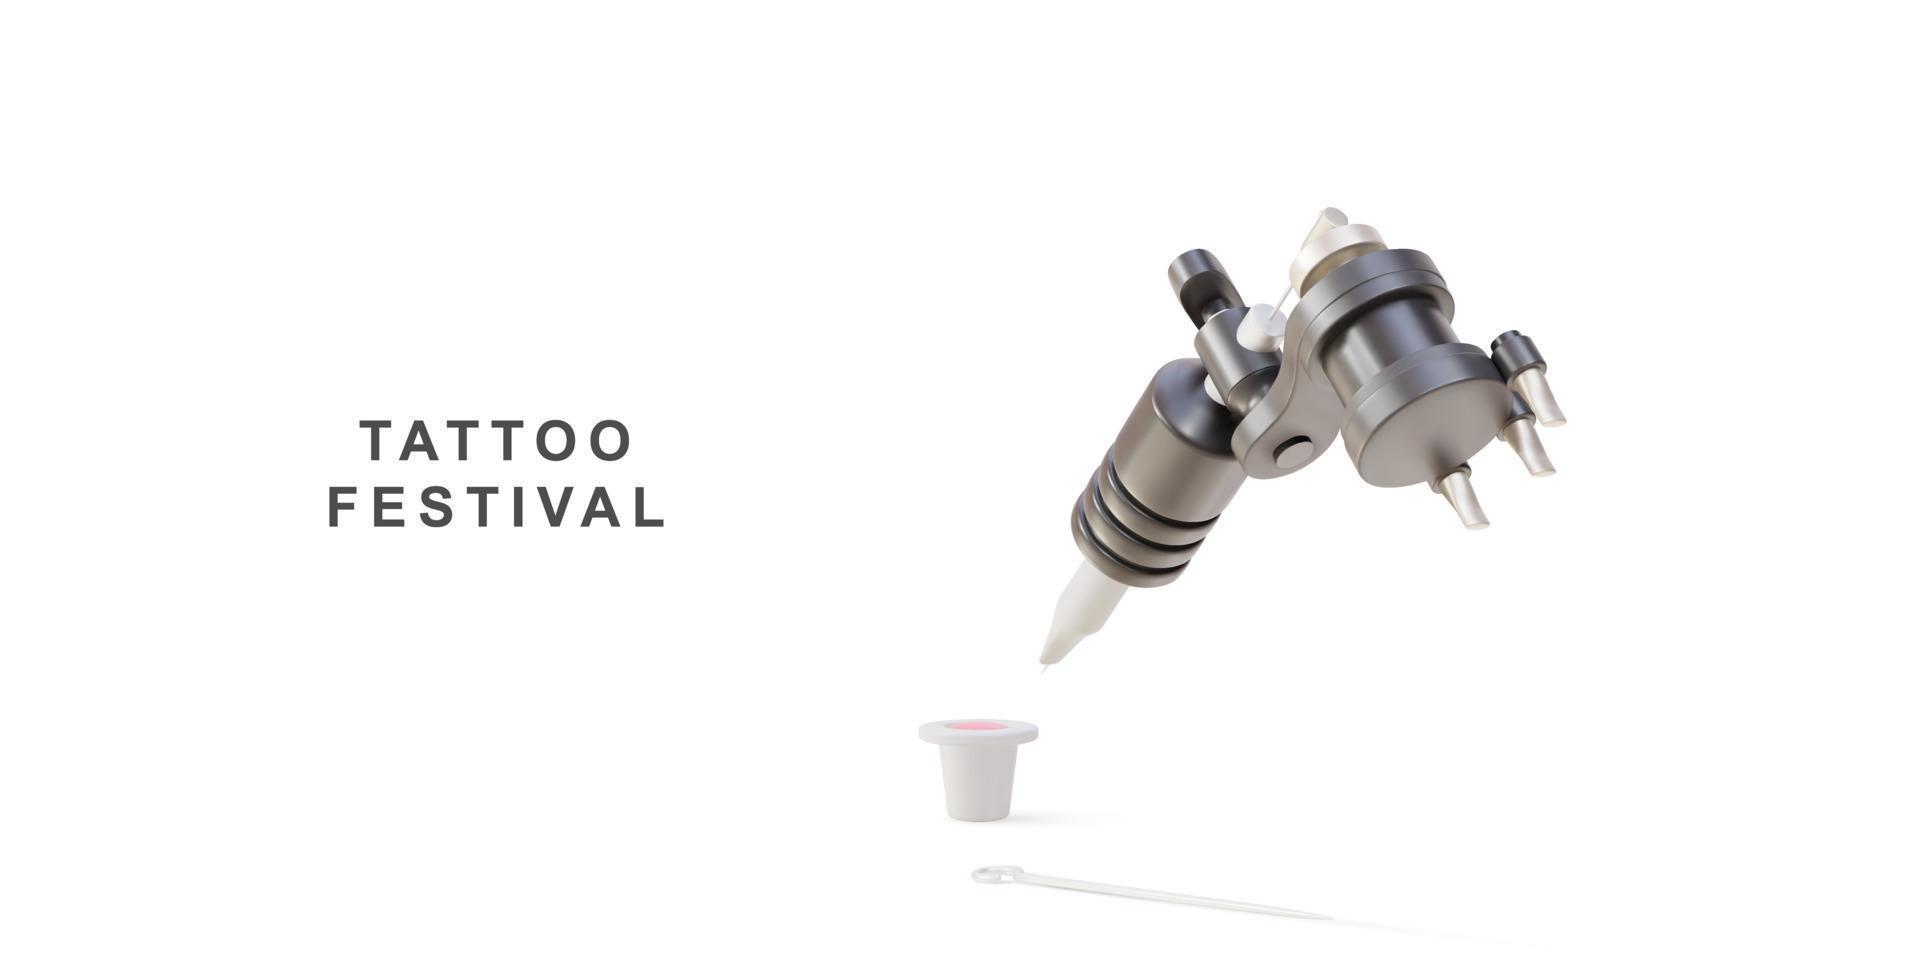 máquina de tatuaje del cartel del festival del tatuaje 3d, agujas del tatuaje y tarro plástico del tatuaje. ilustración vectorial vector